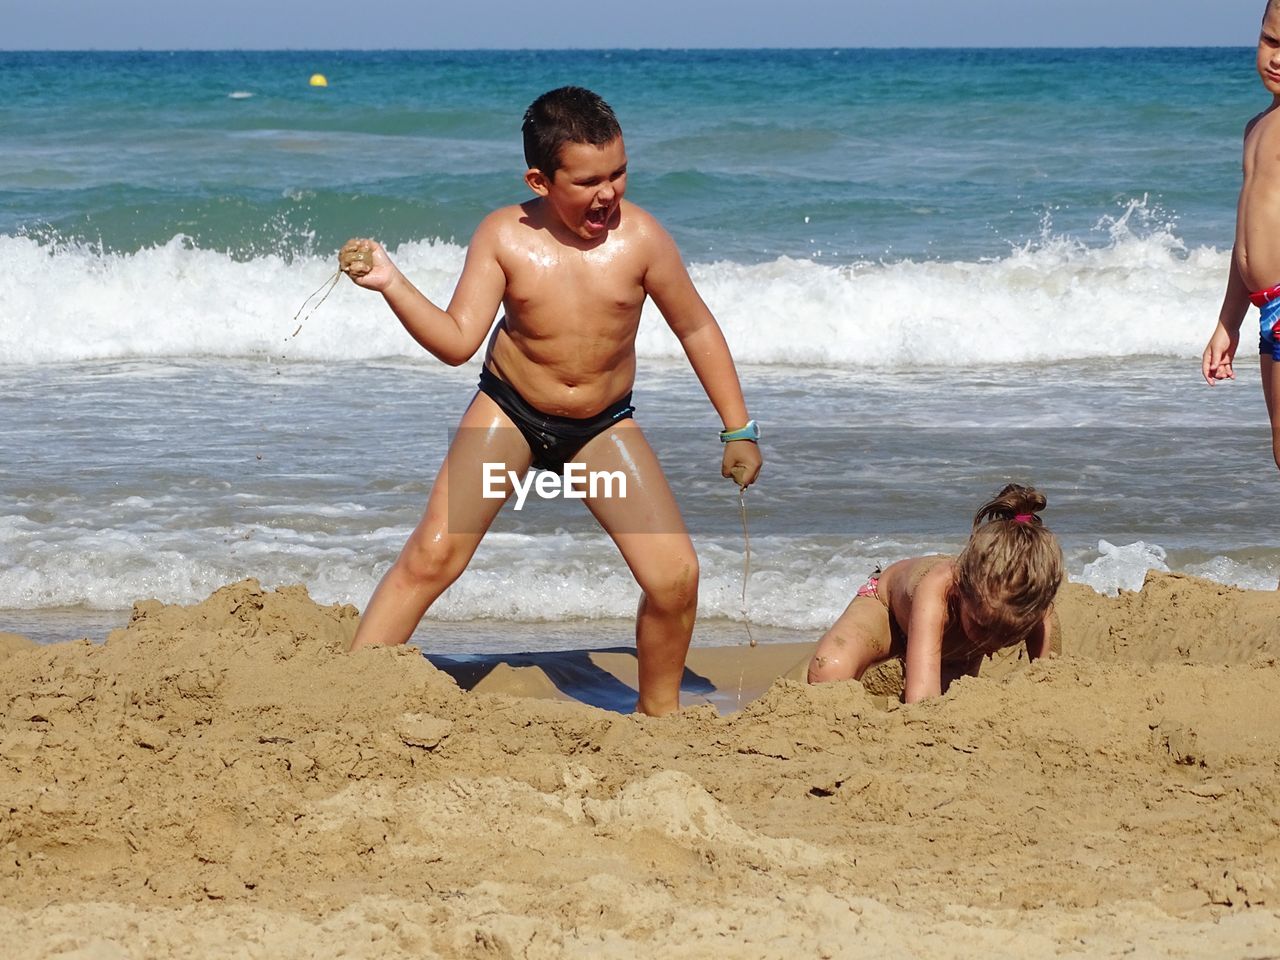 Shirtless boy throwing sand on sister at beach